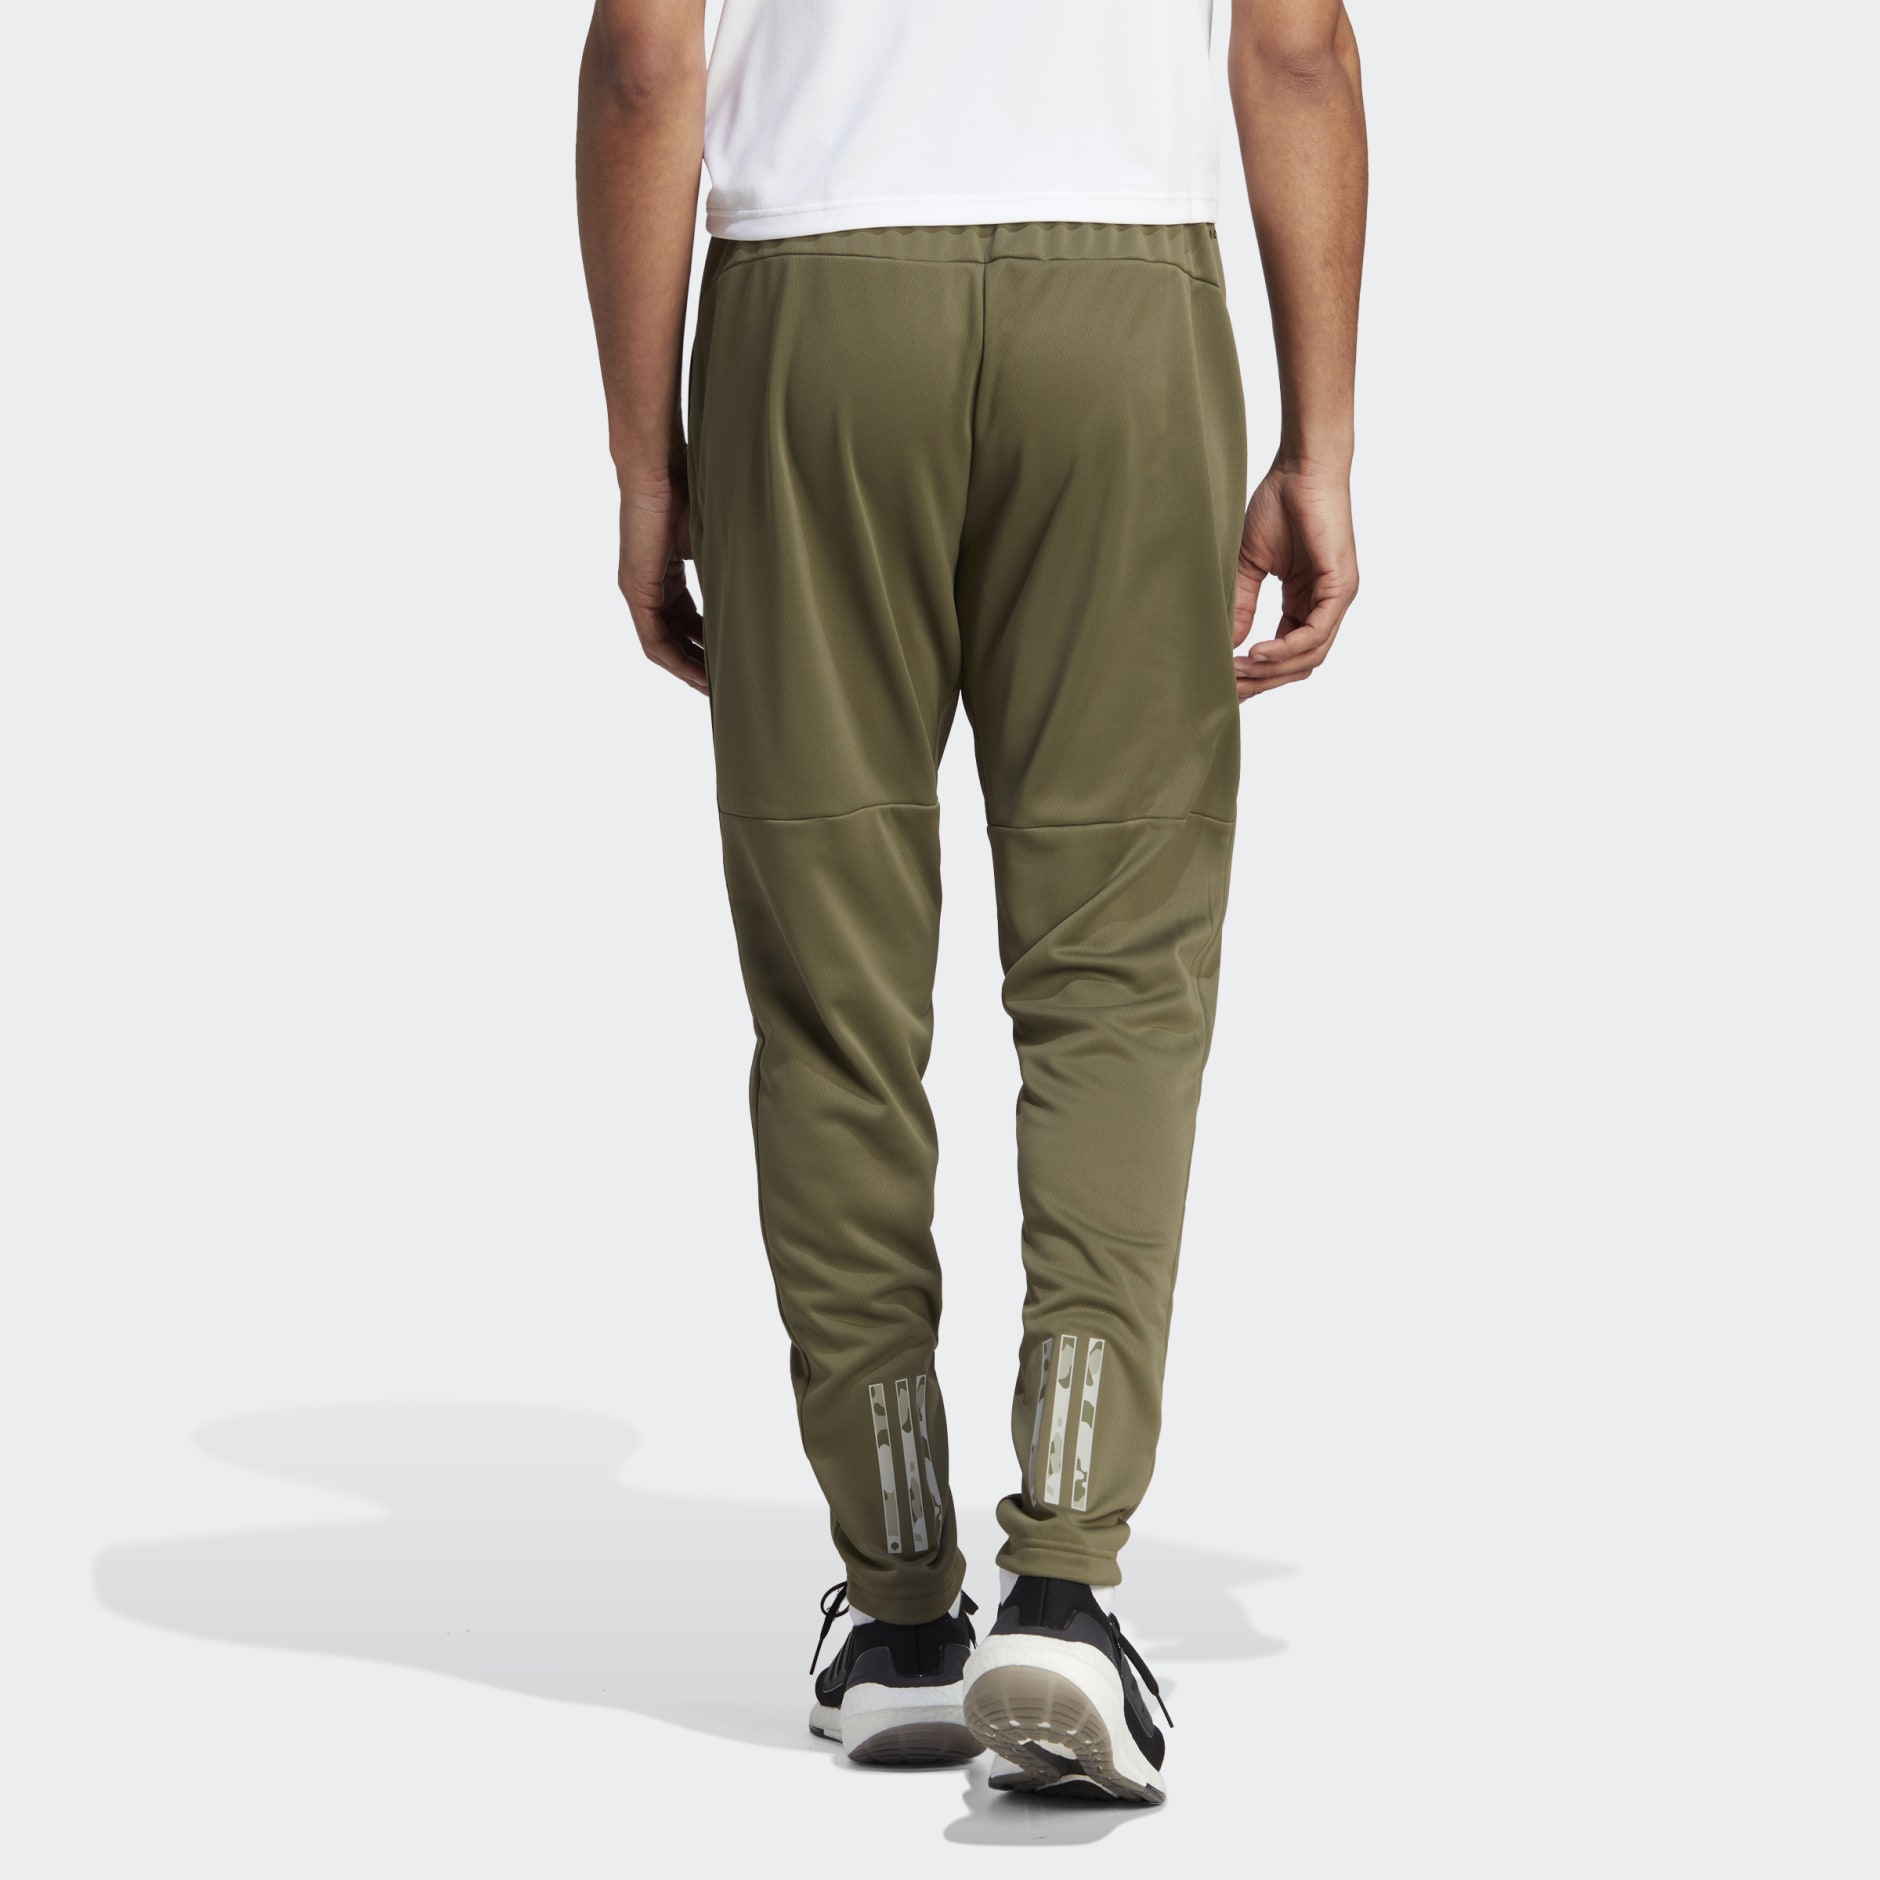 Teal & Lime Adidas Soccer Pants (sz. L) 